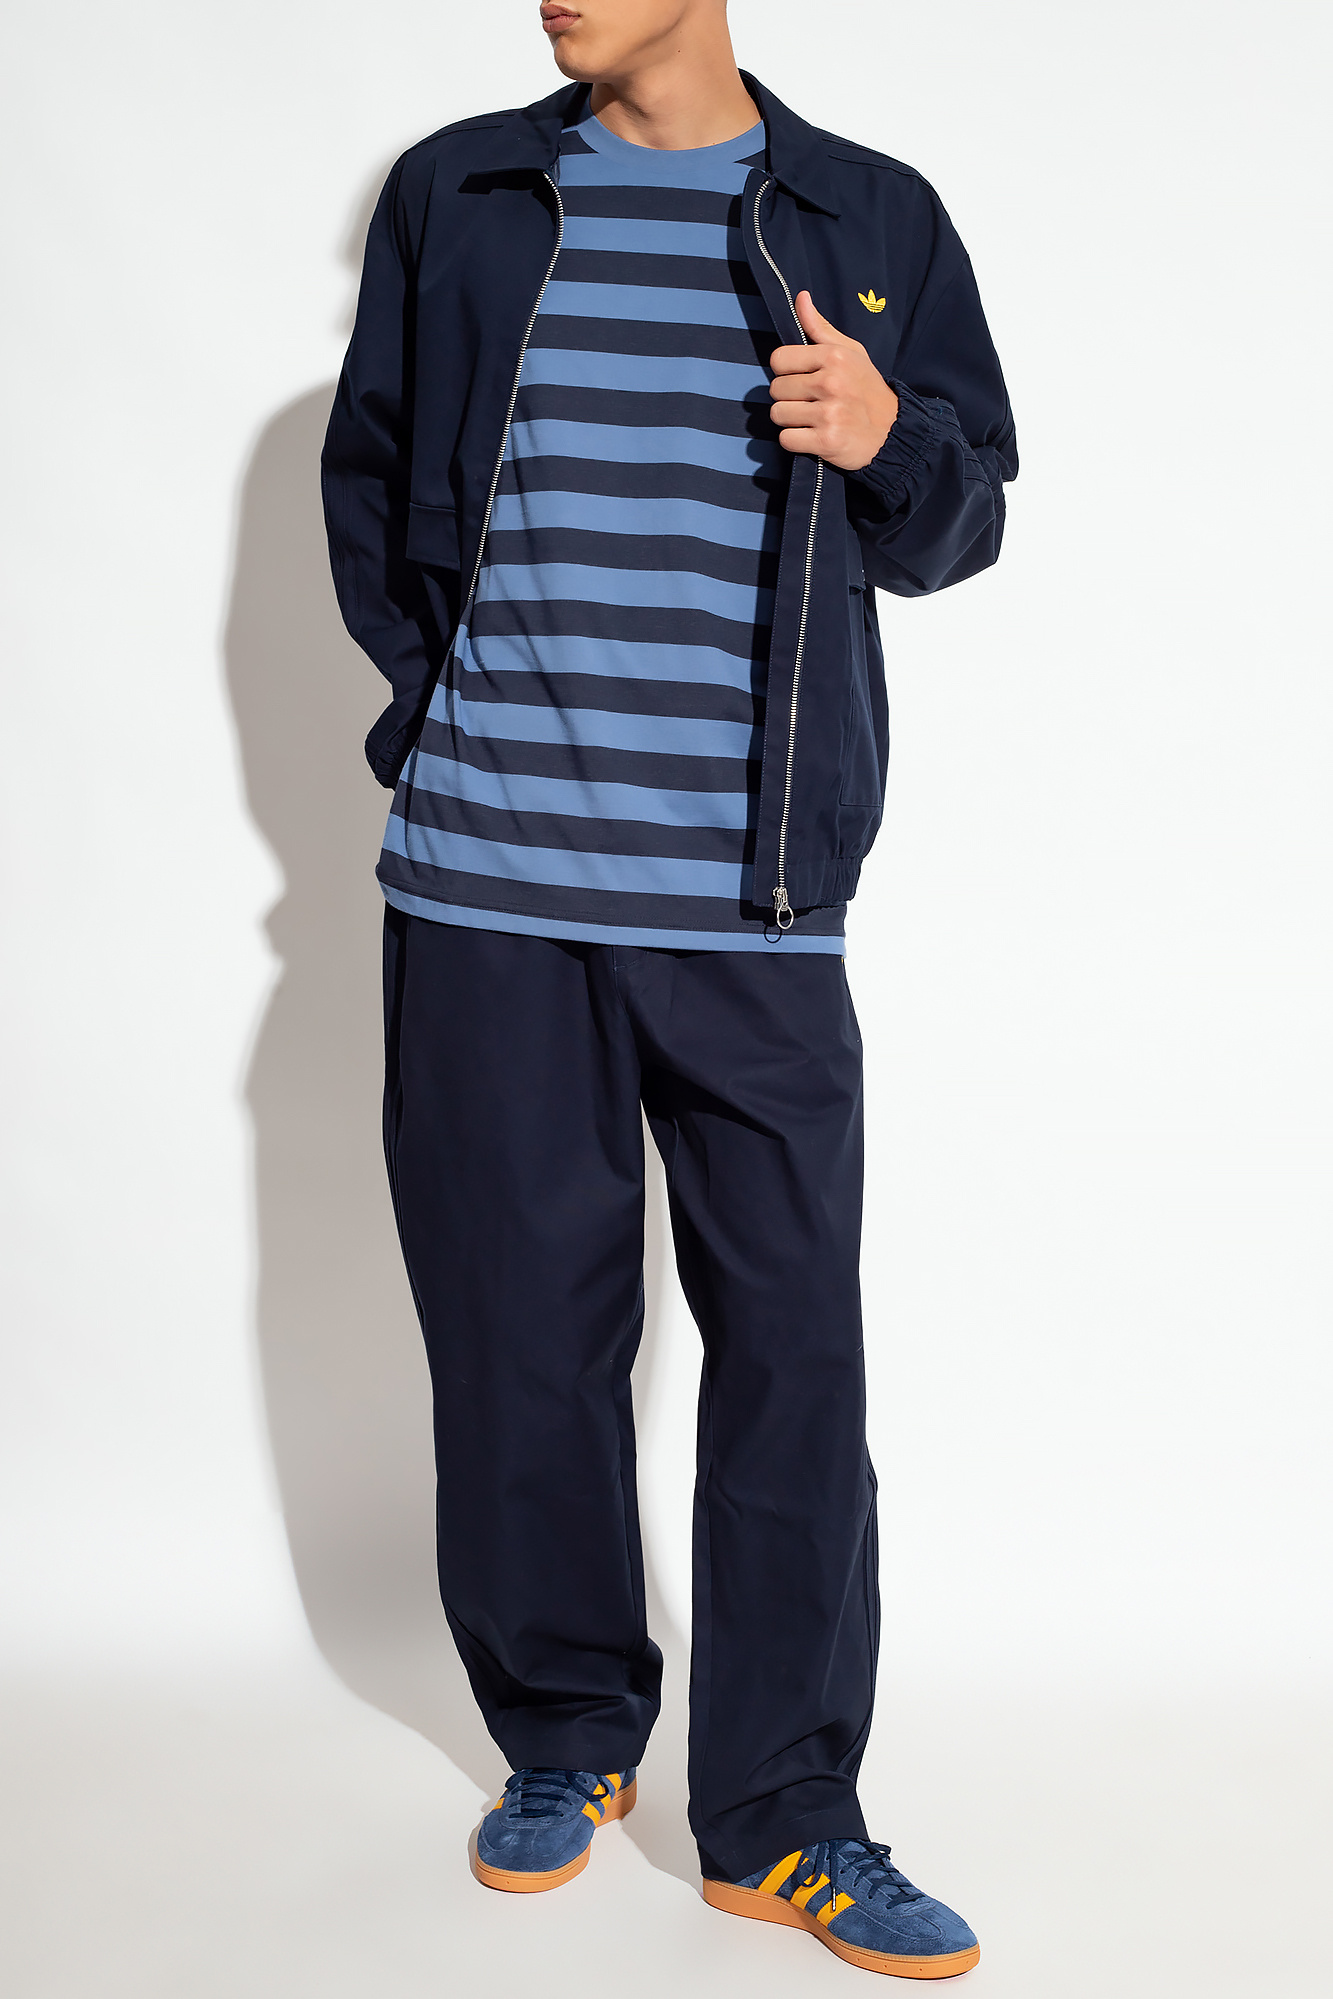 ADIDAS Originals Cotton trousers | Men's Clothing | Vitkac